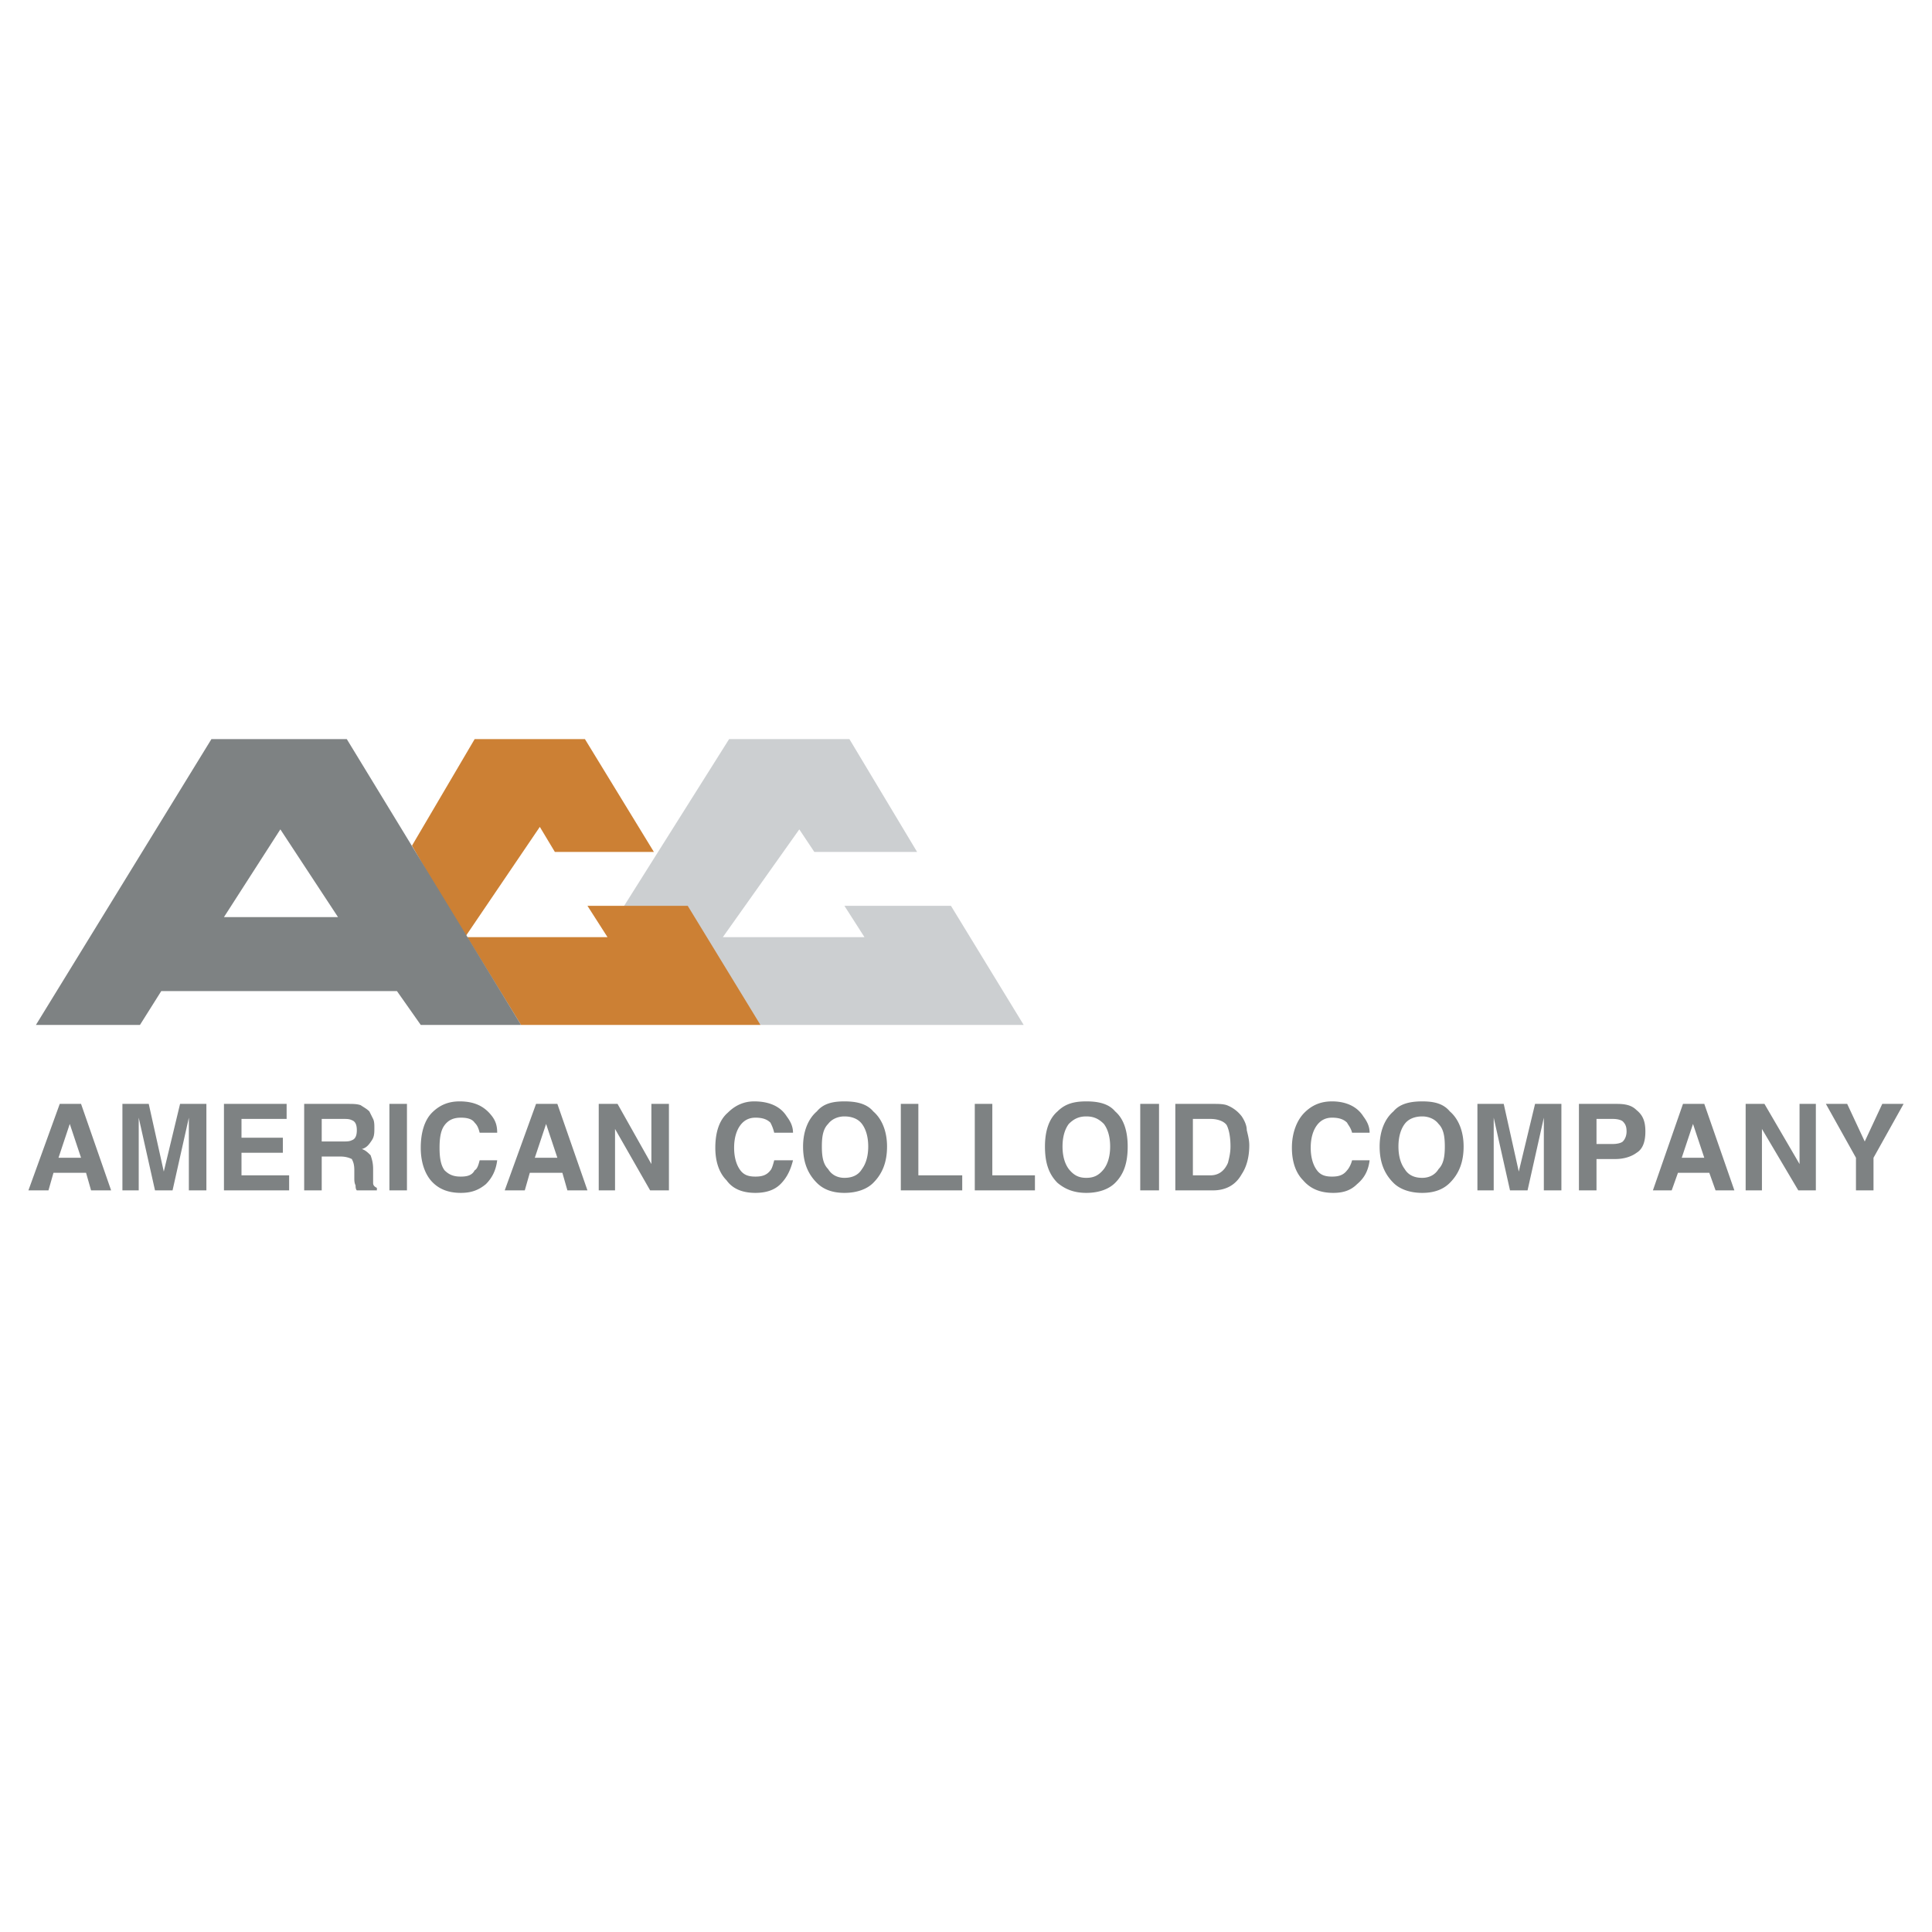 Associated Cement Companies (ACC) logo colors